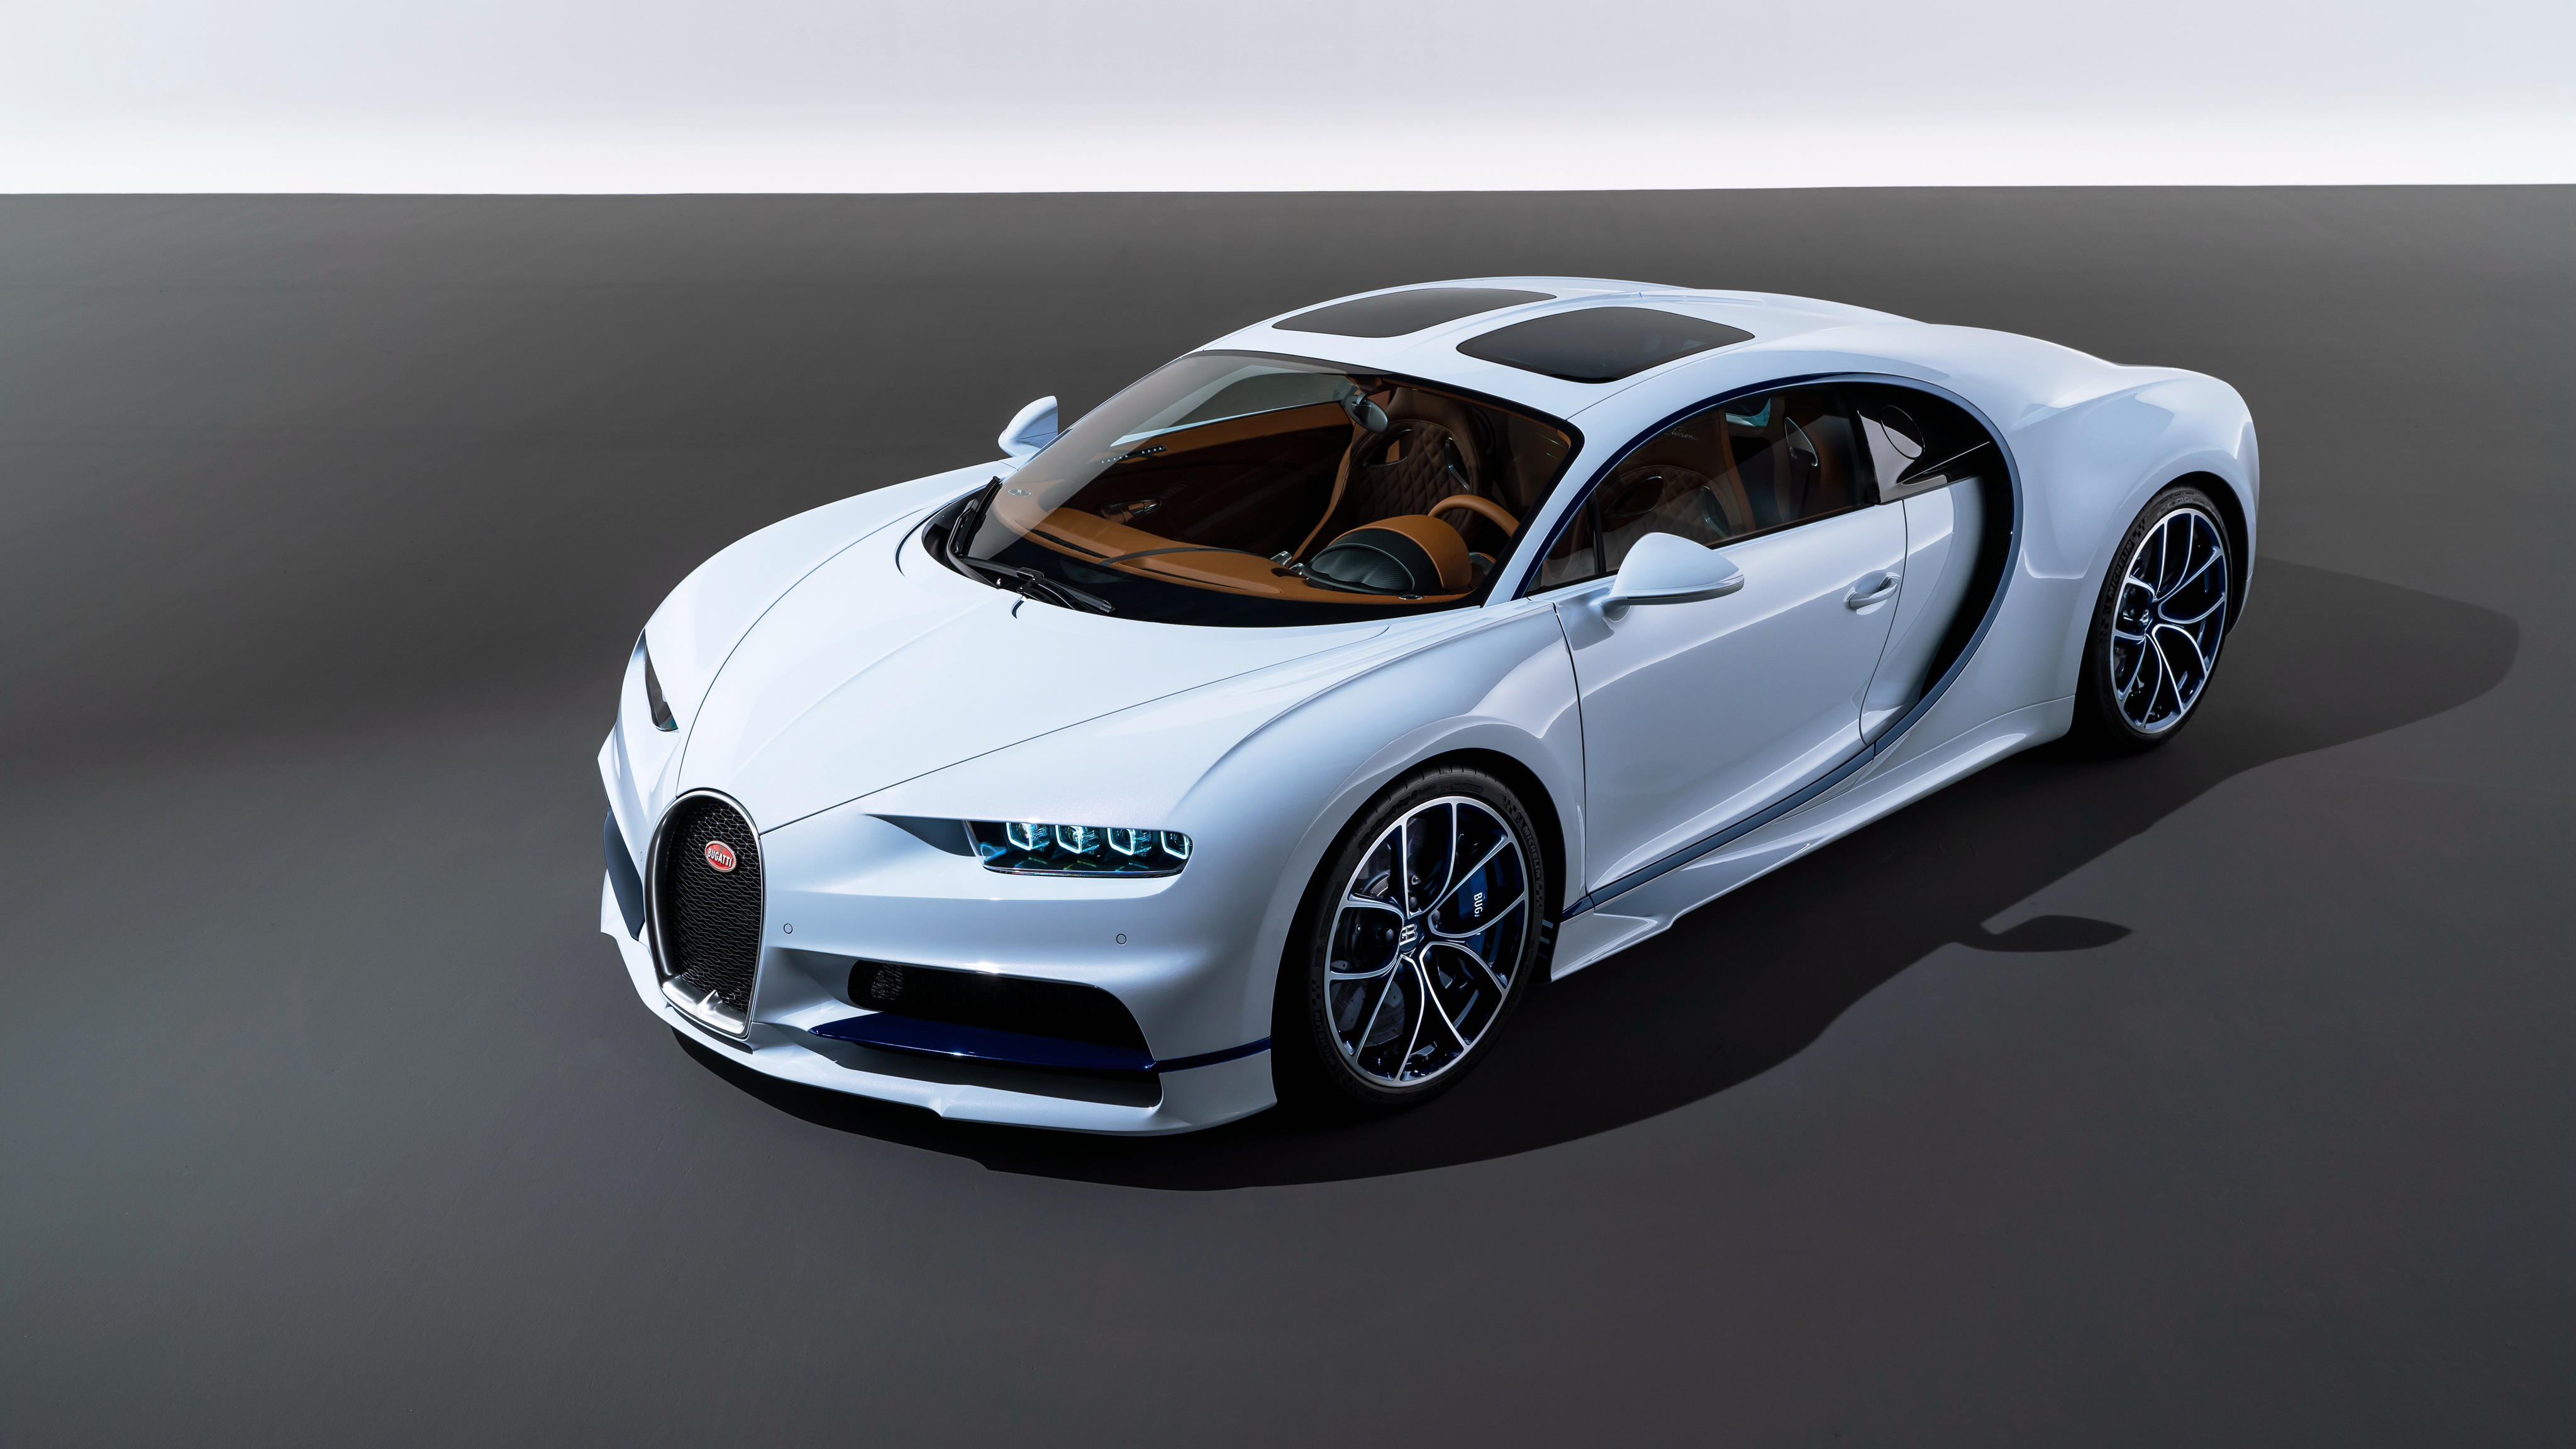 Bugatti Chiron Sky View Show Car 4K Wallpapers